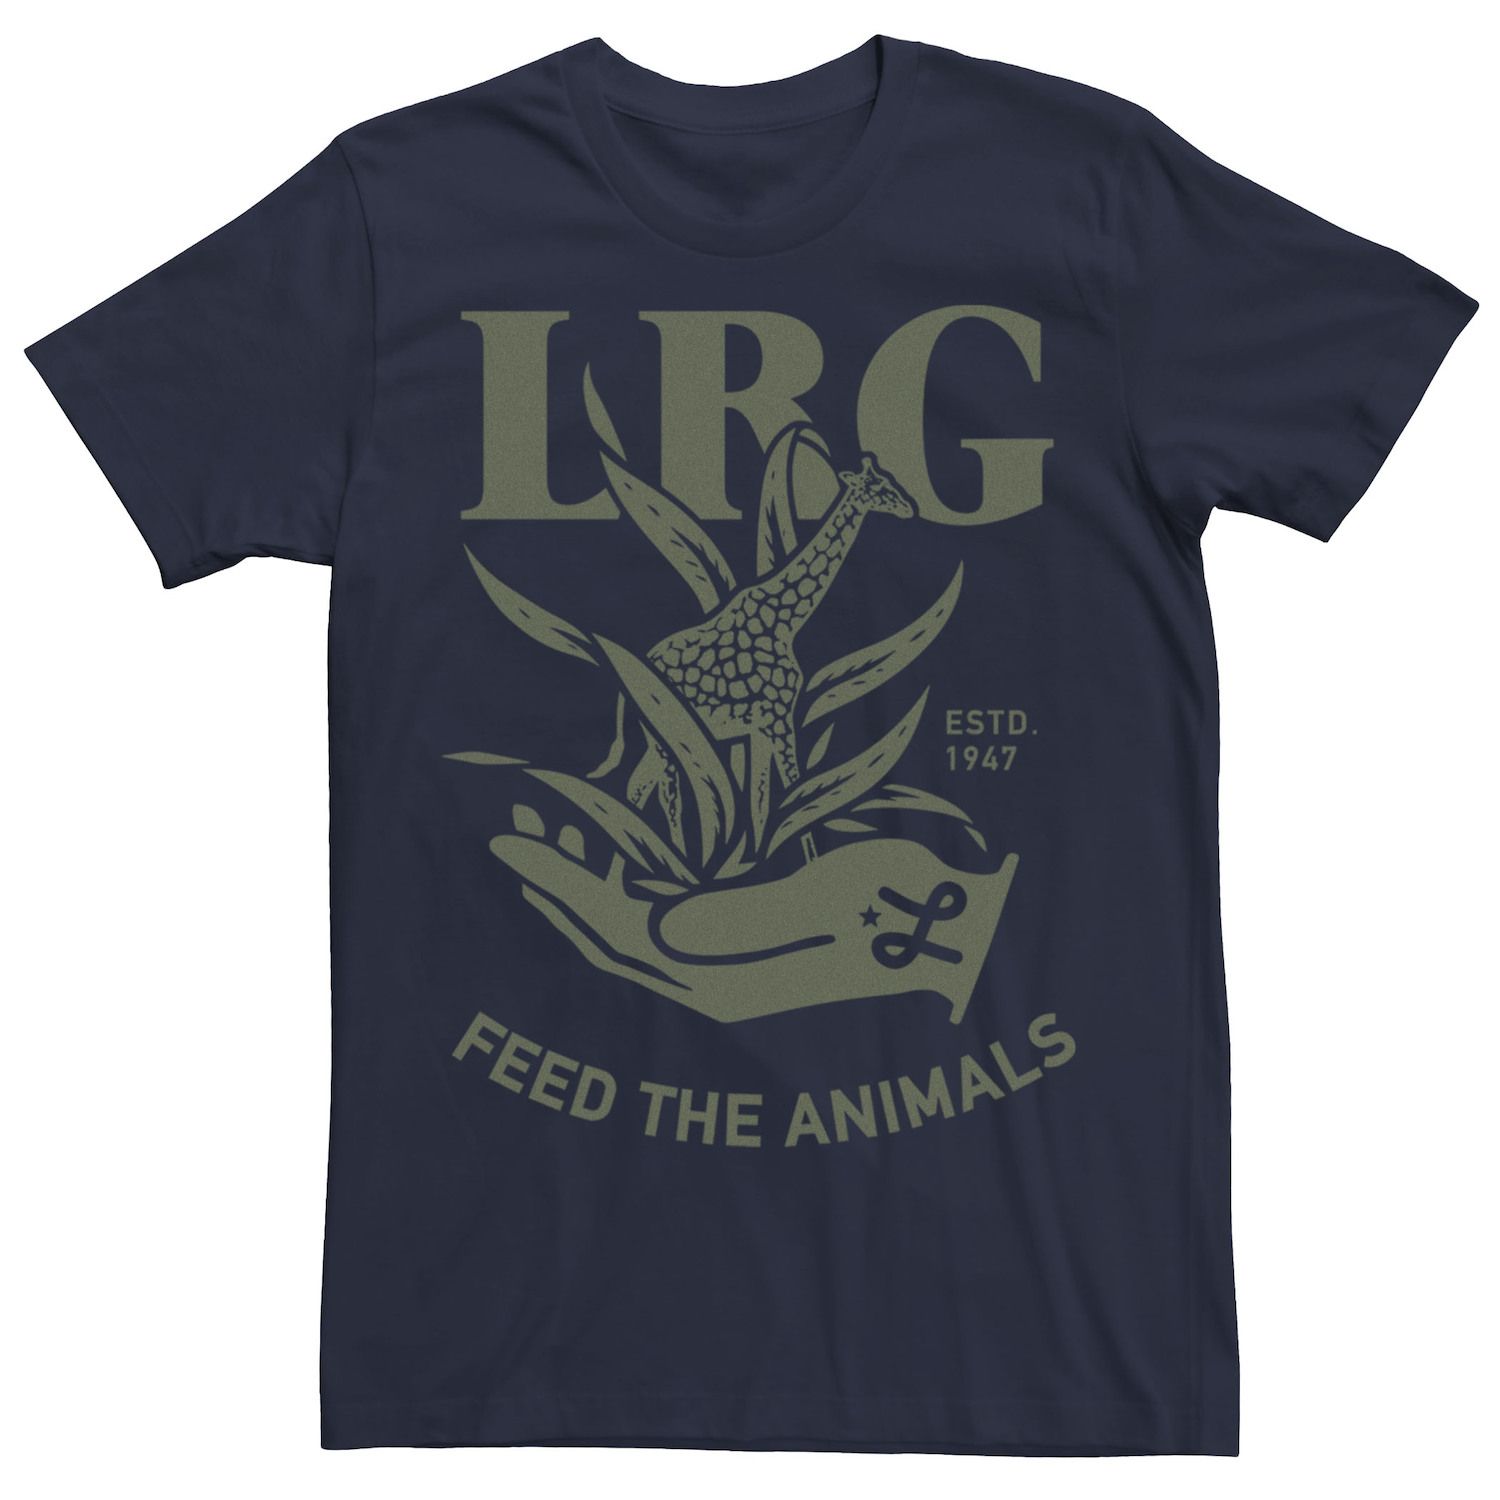 Мужская футболка LRG Feed The Animals Licensed Character